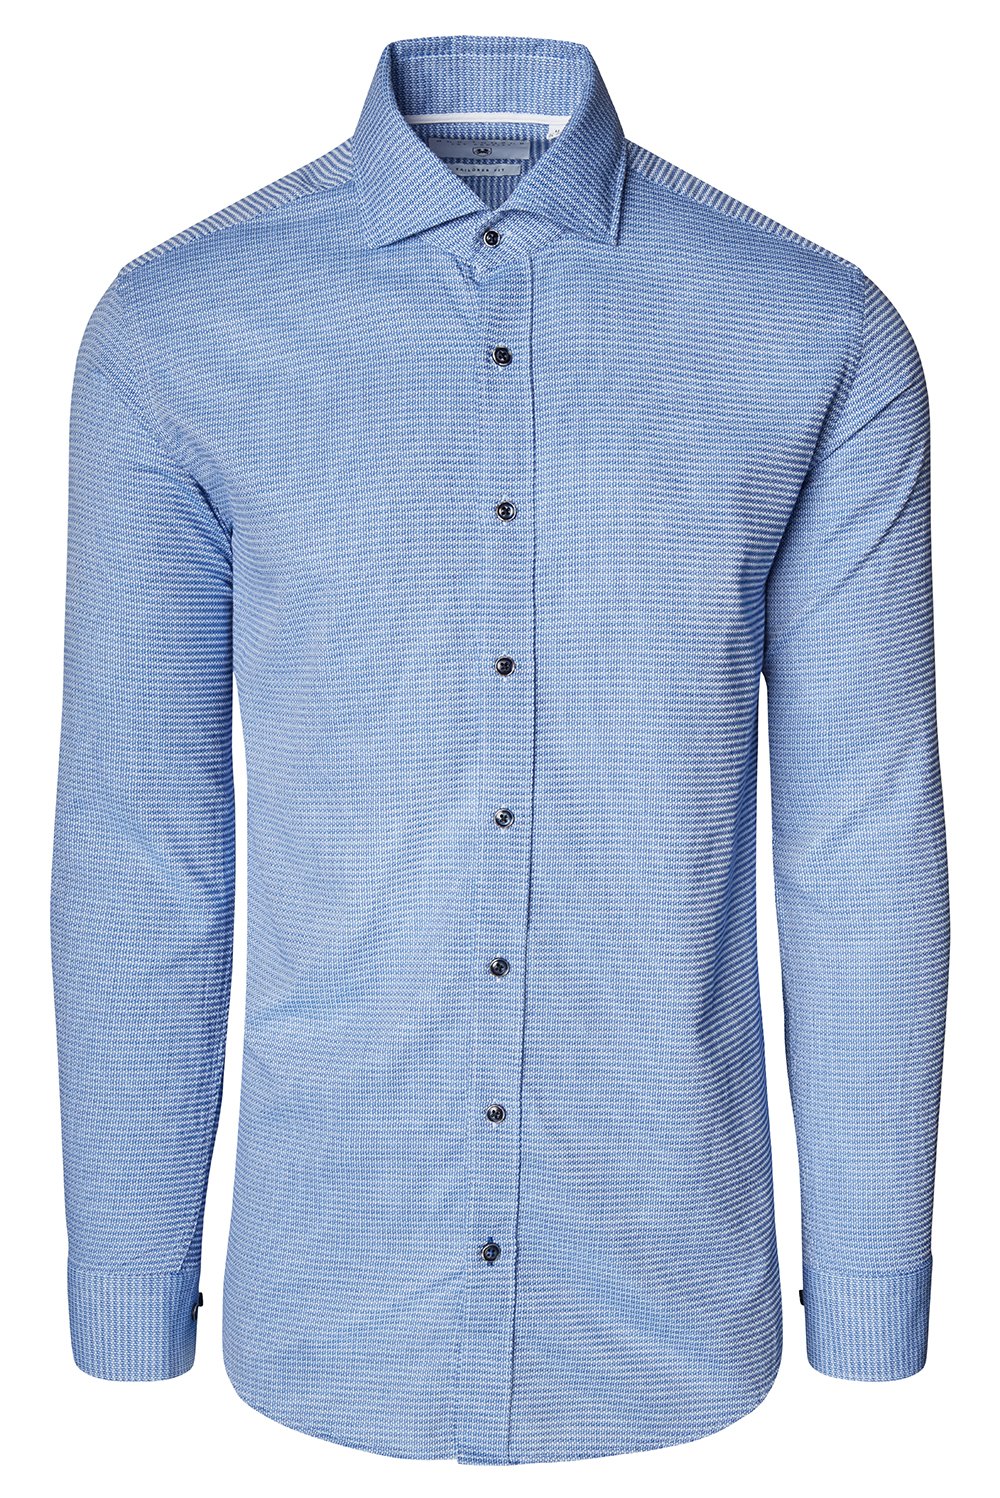 Jacquard Cotton Tonal Button Dress Shirt - Blue - Ron Tomson